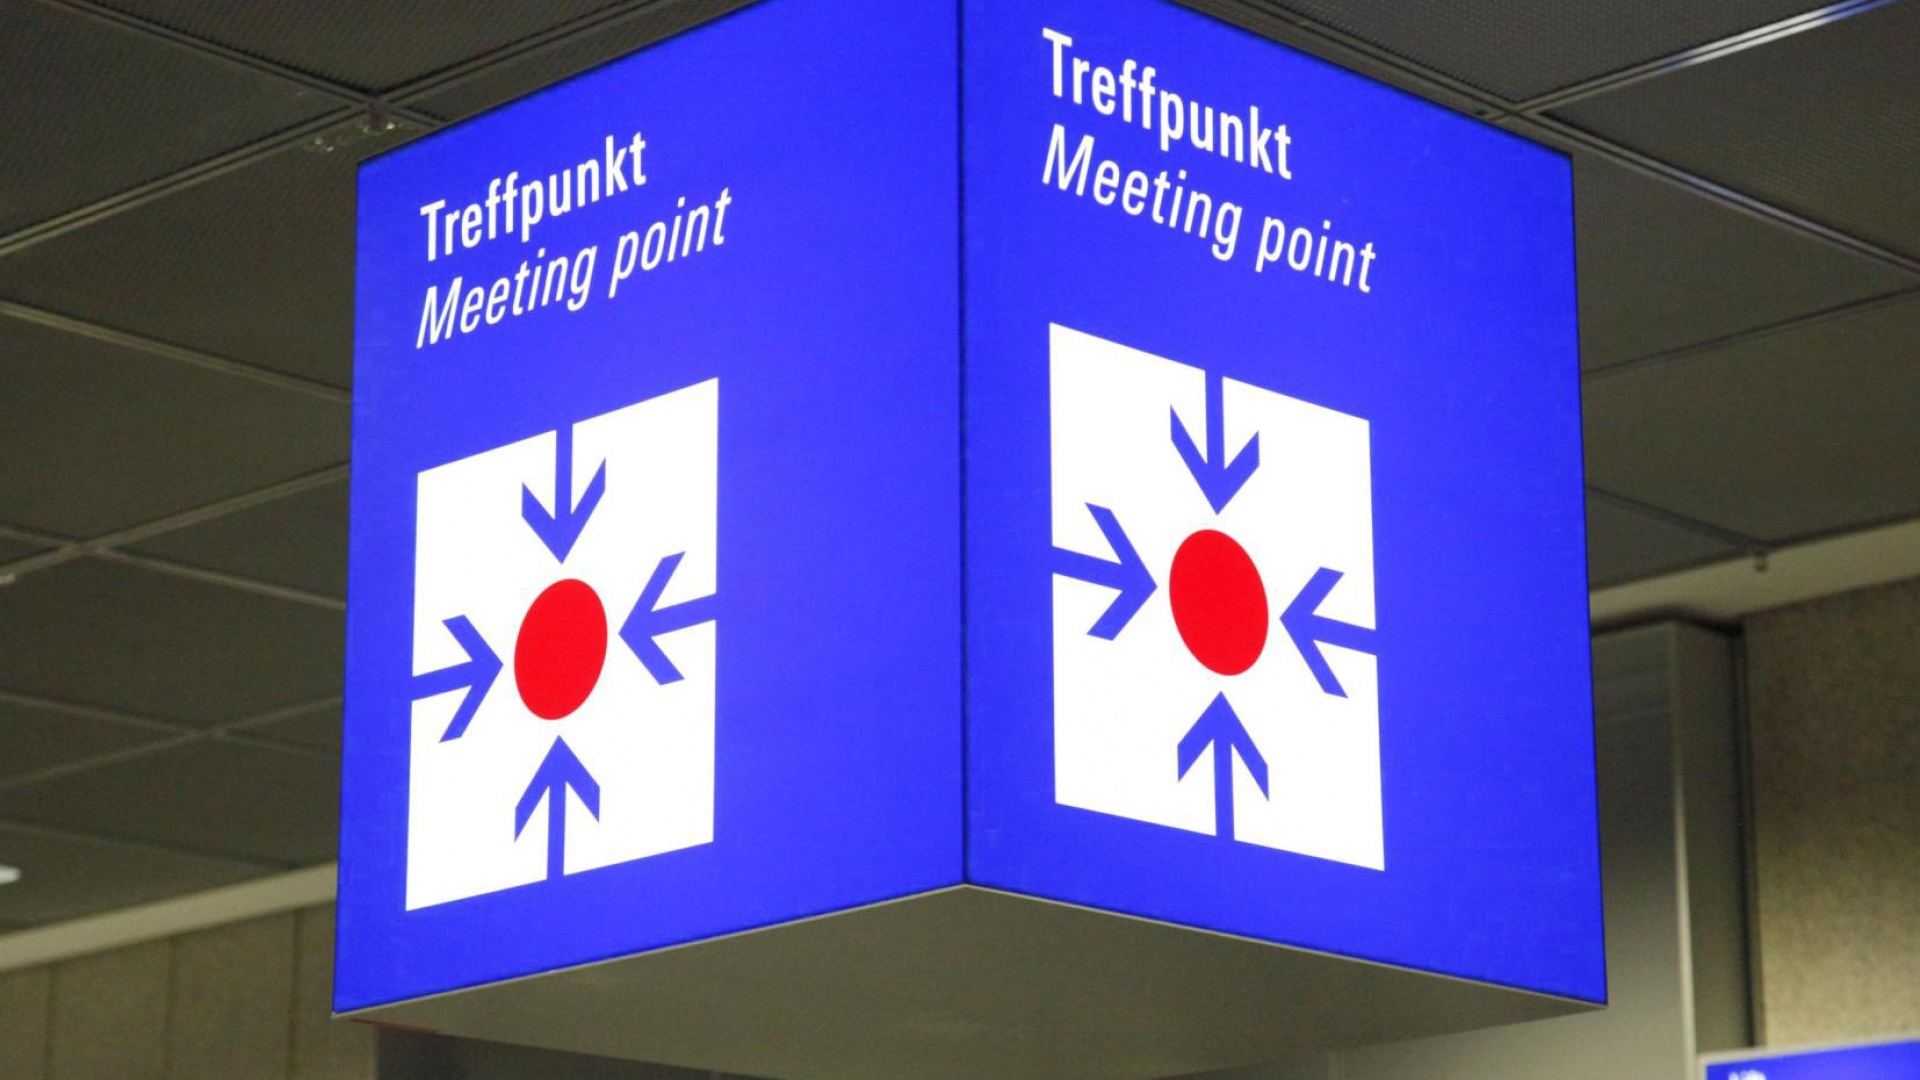 Meeting Point Terminal 2